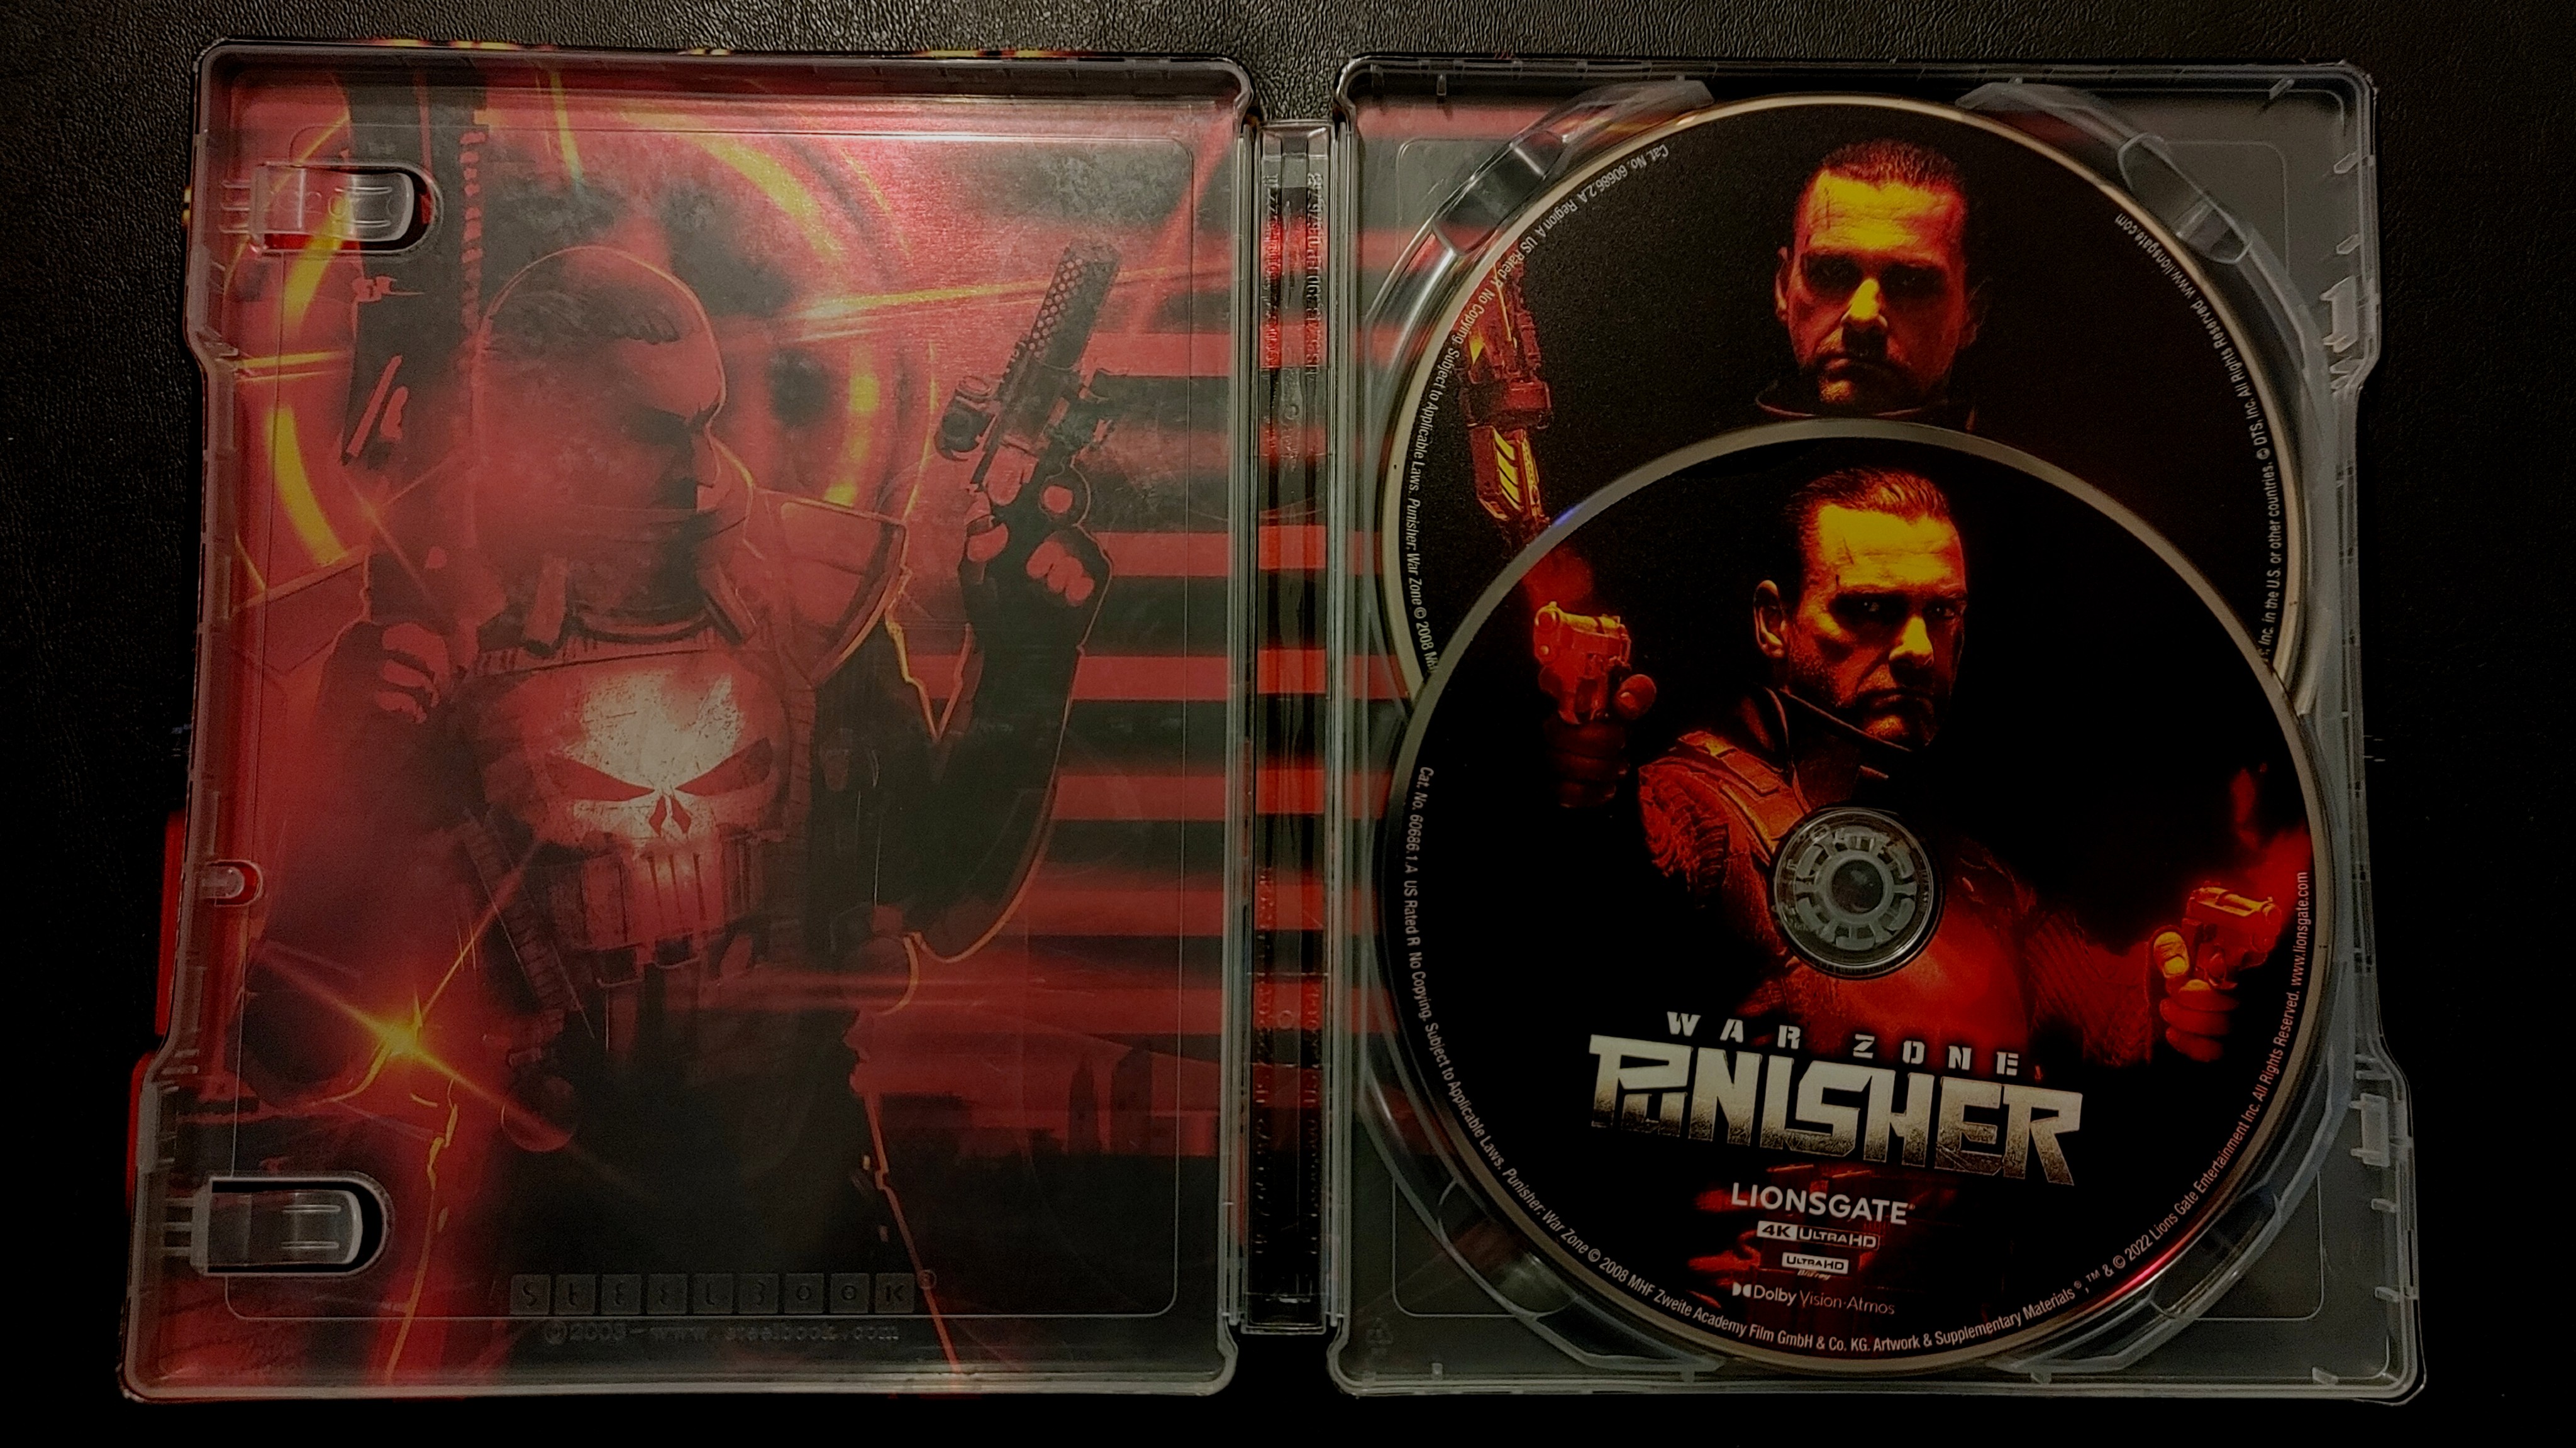 Punisher: War Zone (2008) Marvel Film Review 